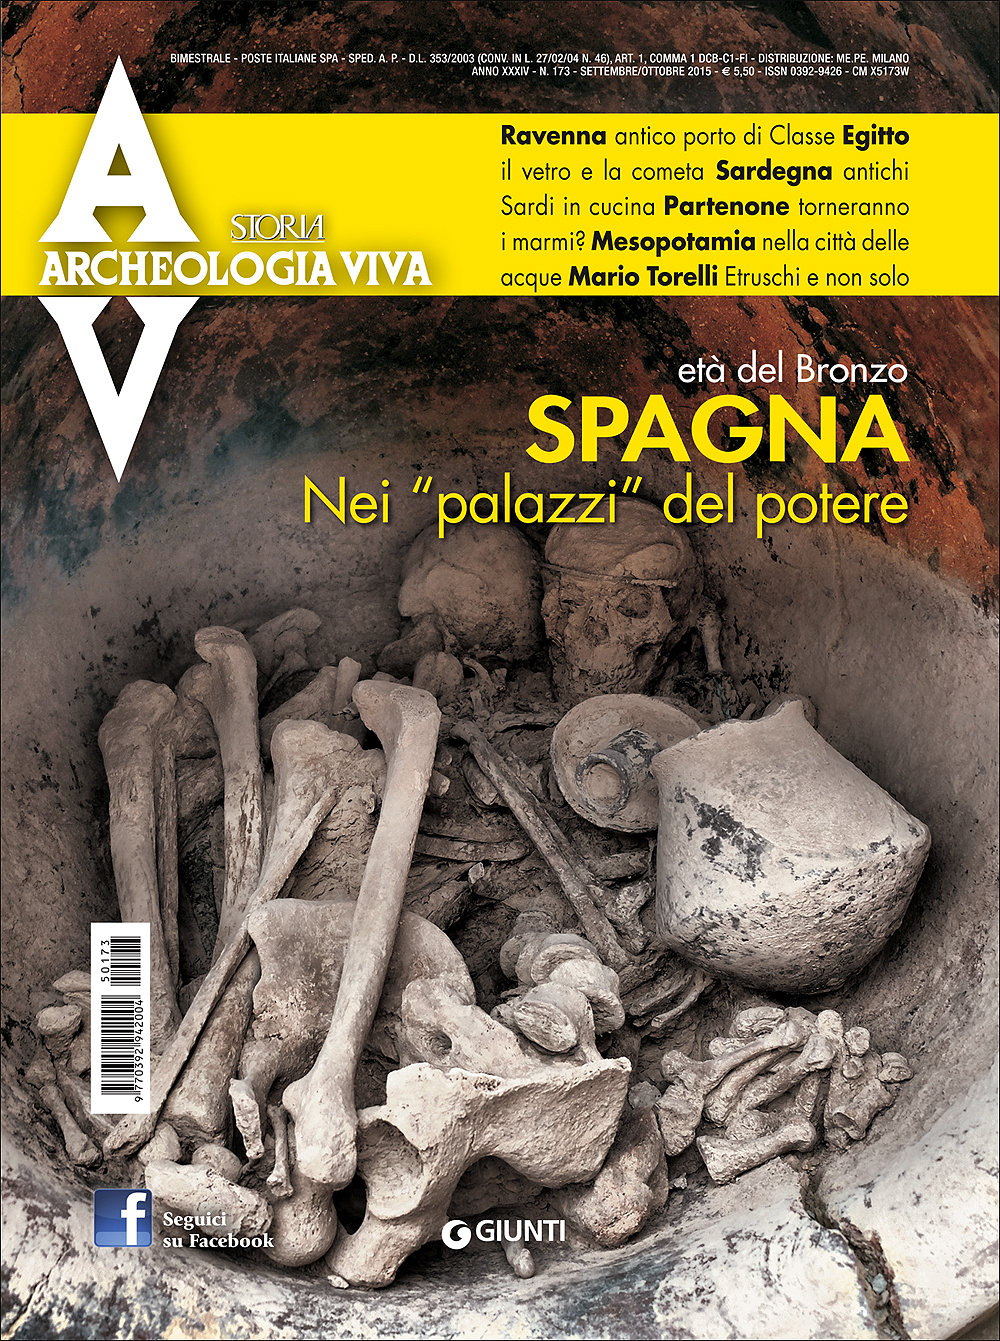 Archeologia Viva n. 173 - settembre/ottobre 2015